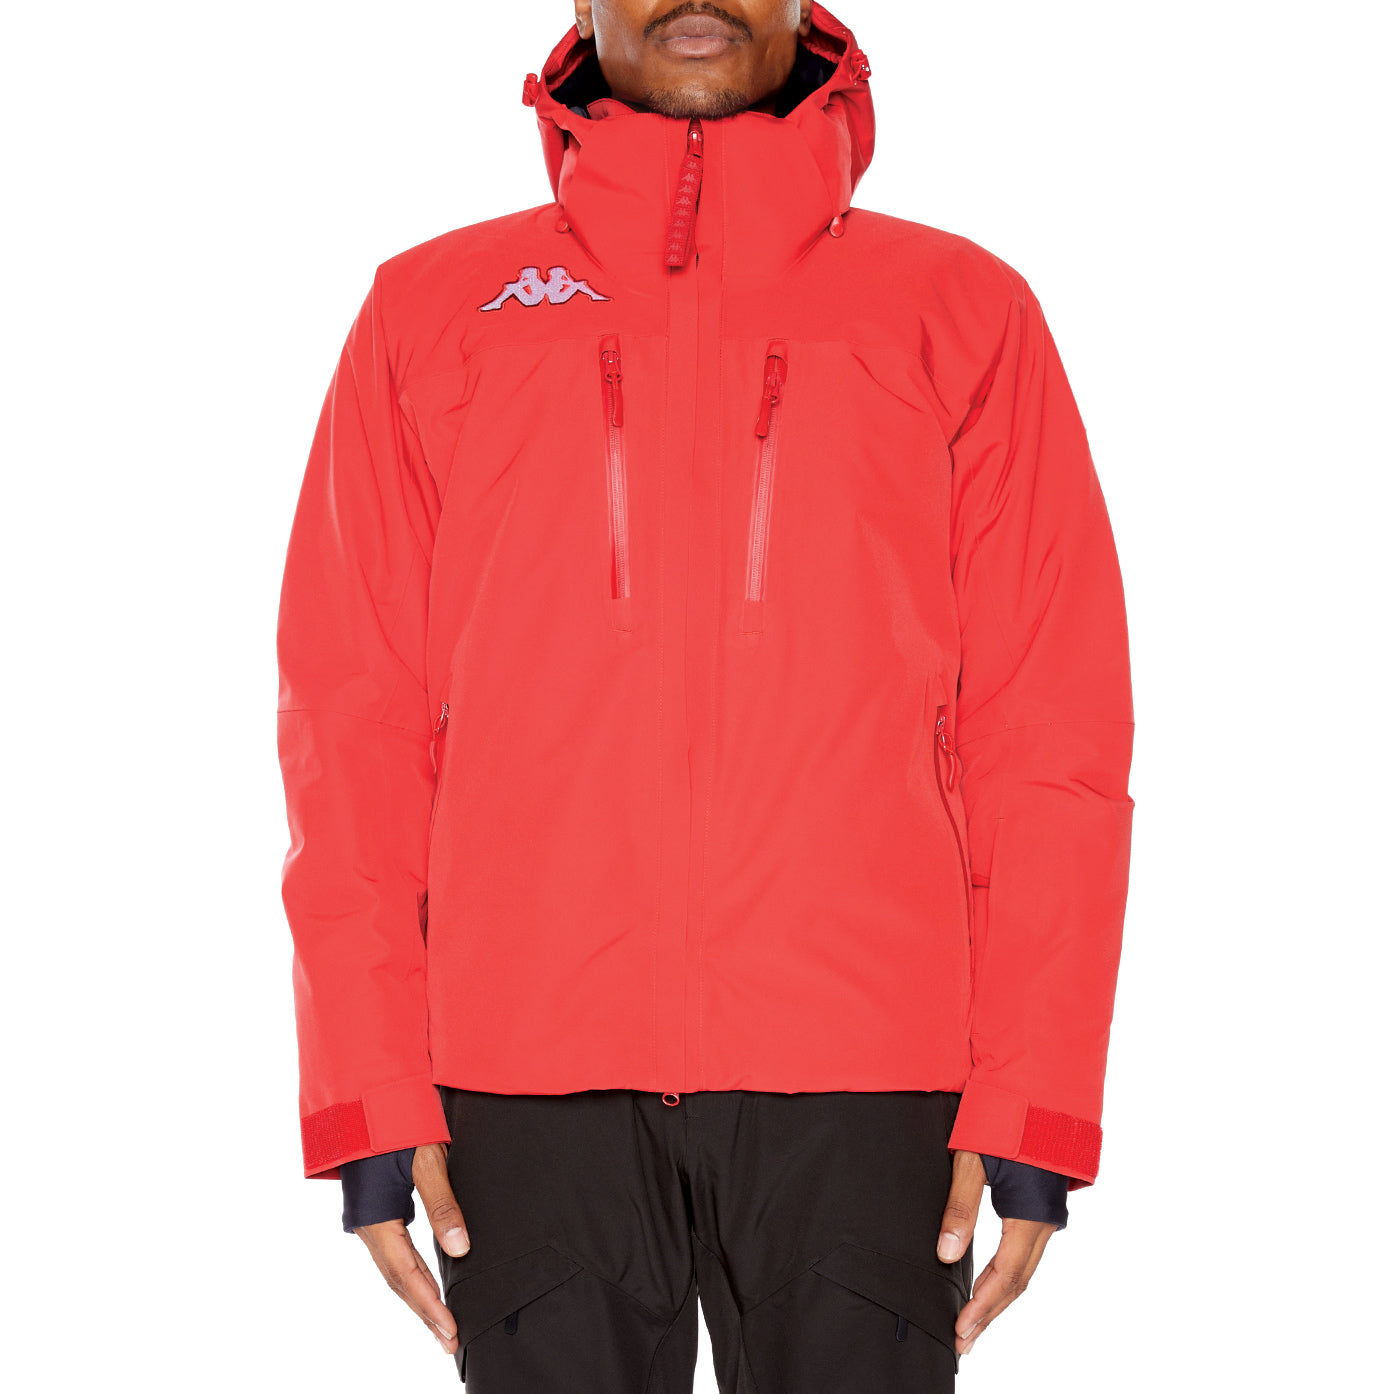 Kappa Men's USA Ski Team Insulator Jacket - Red Racing